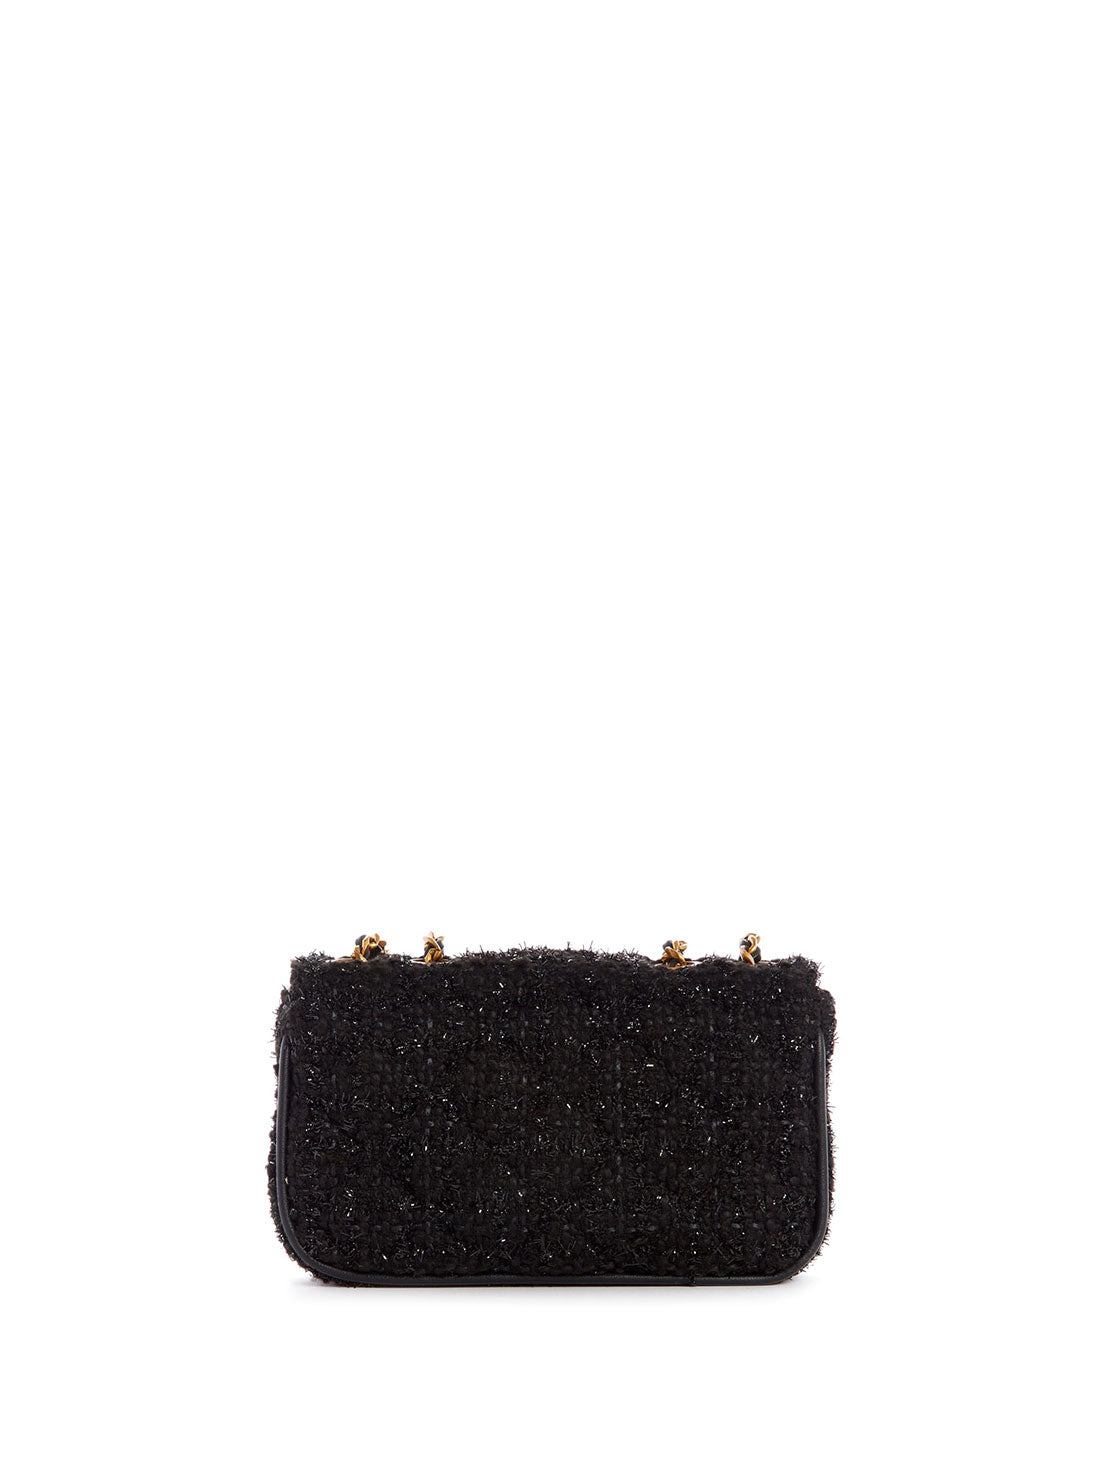 GUESS Womens Black Tweed Cessily Micro Mini Crossbody Bag TA767978 Back View